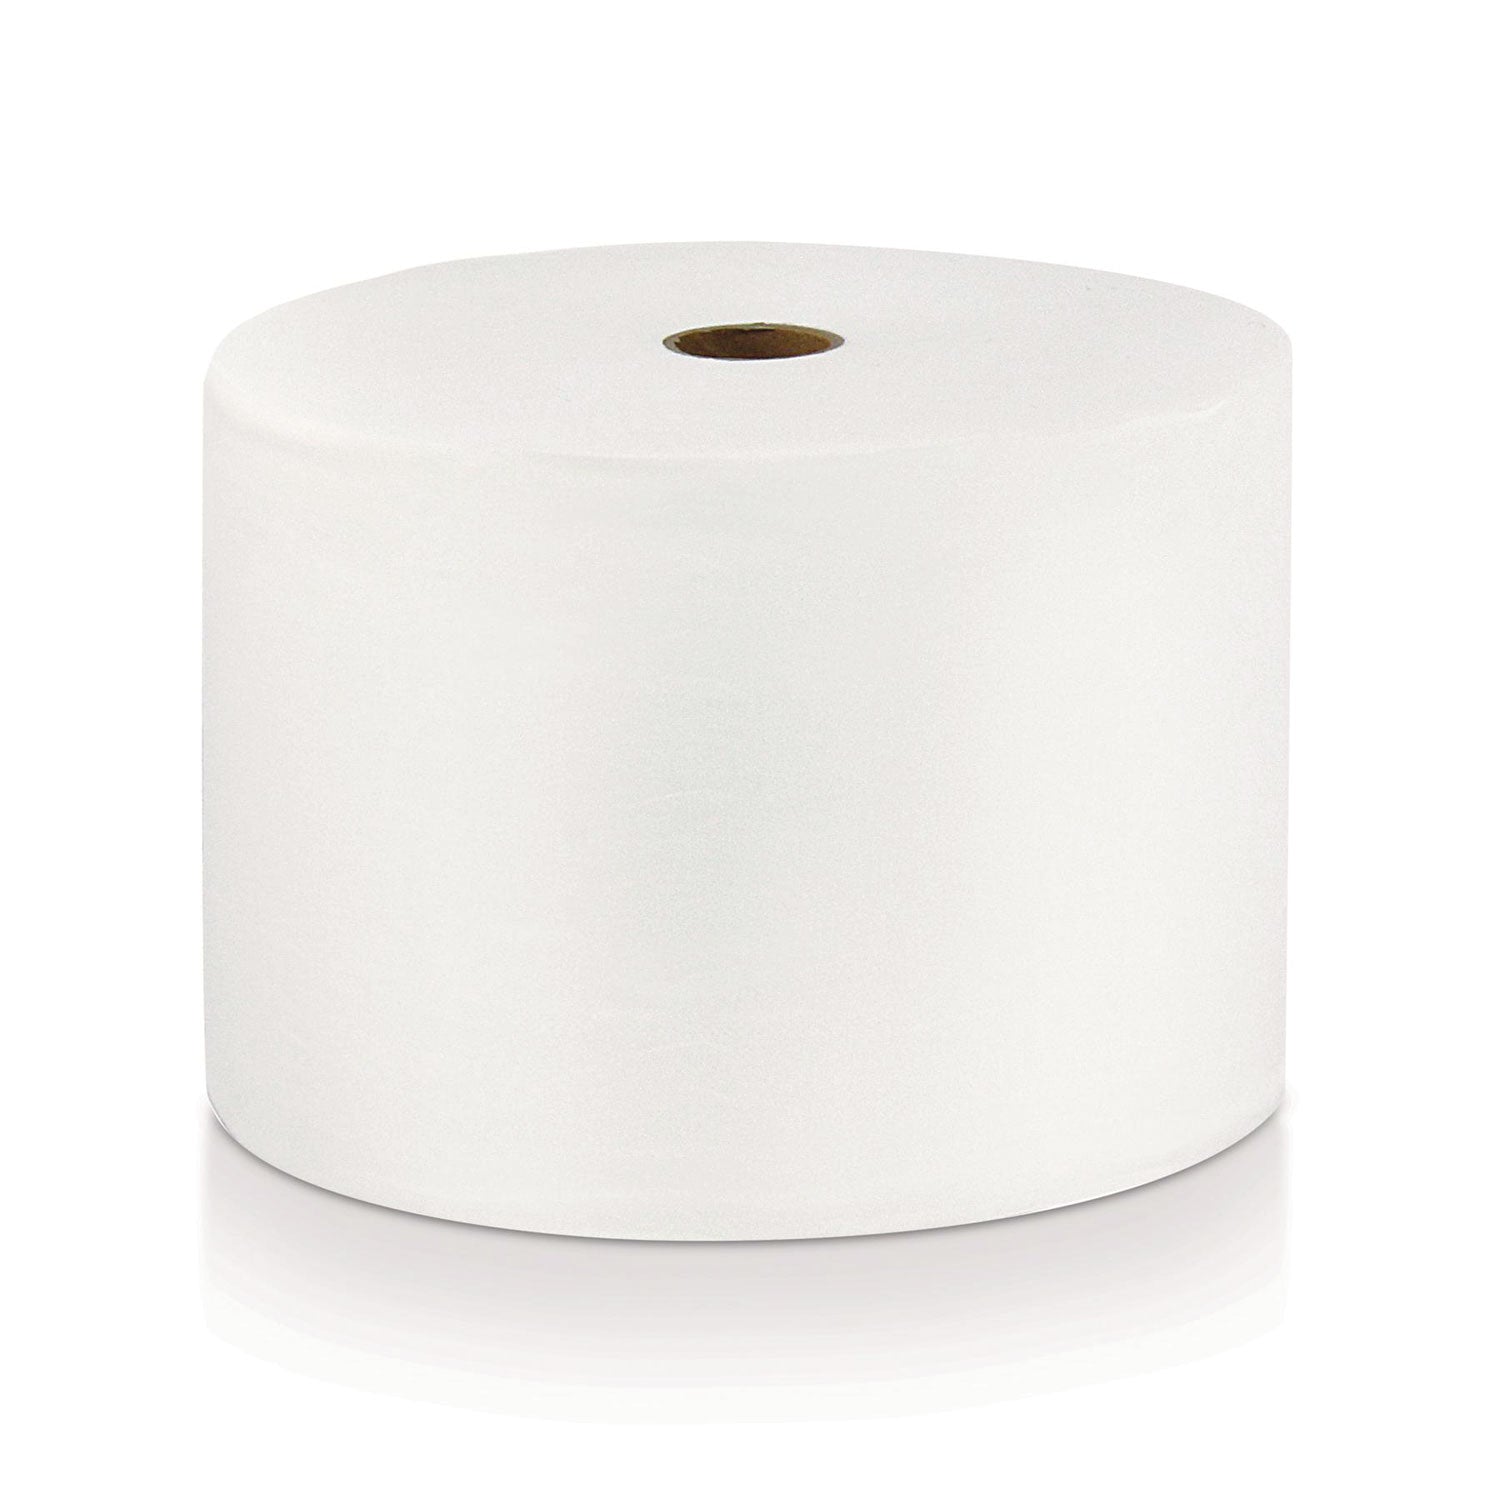 LoCor Bath Tissue - 2 Ply - 3.85" x 4.05" - 1500 Sheets/Roll - White - Fiber - Eco-friendly, Soft - For Hand - 18 / Carton - 1